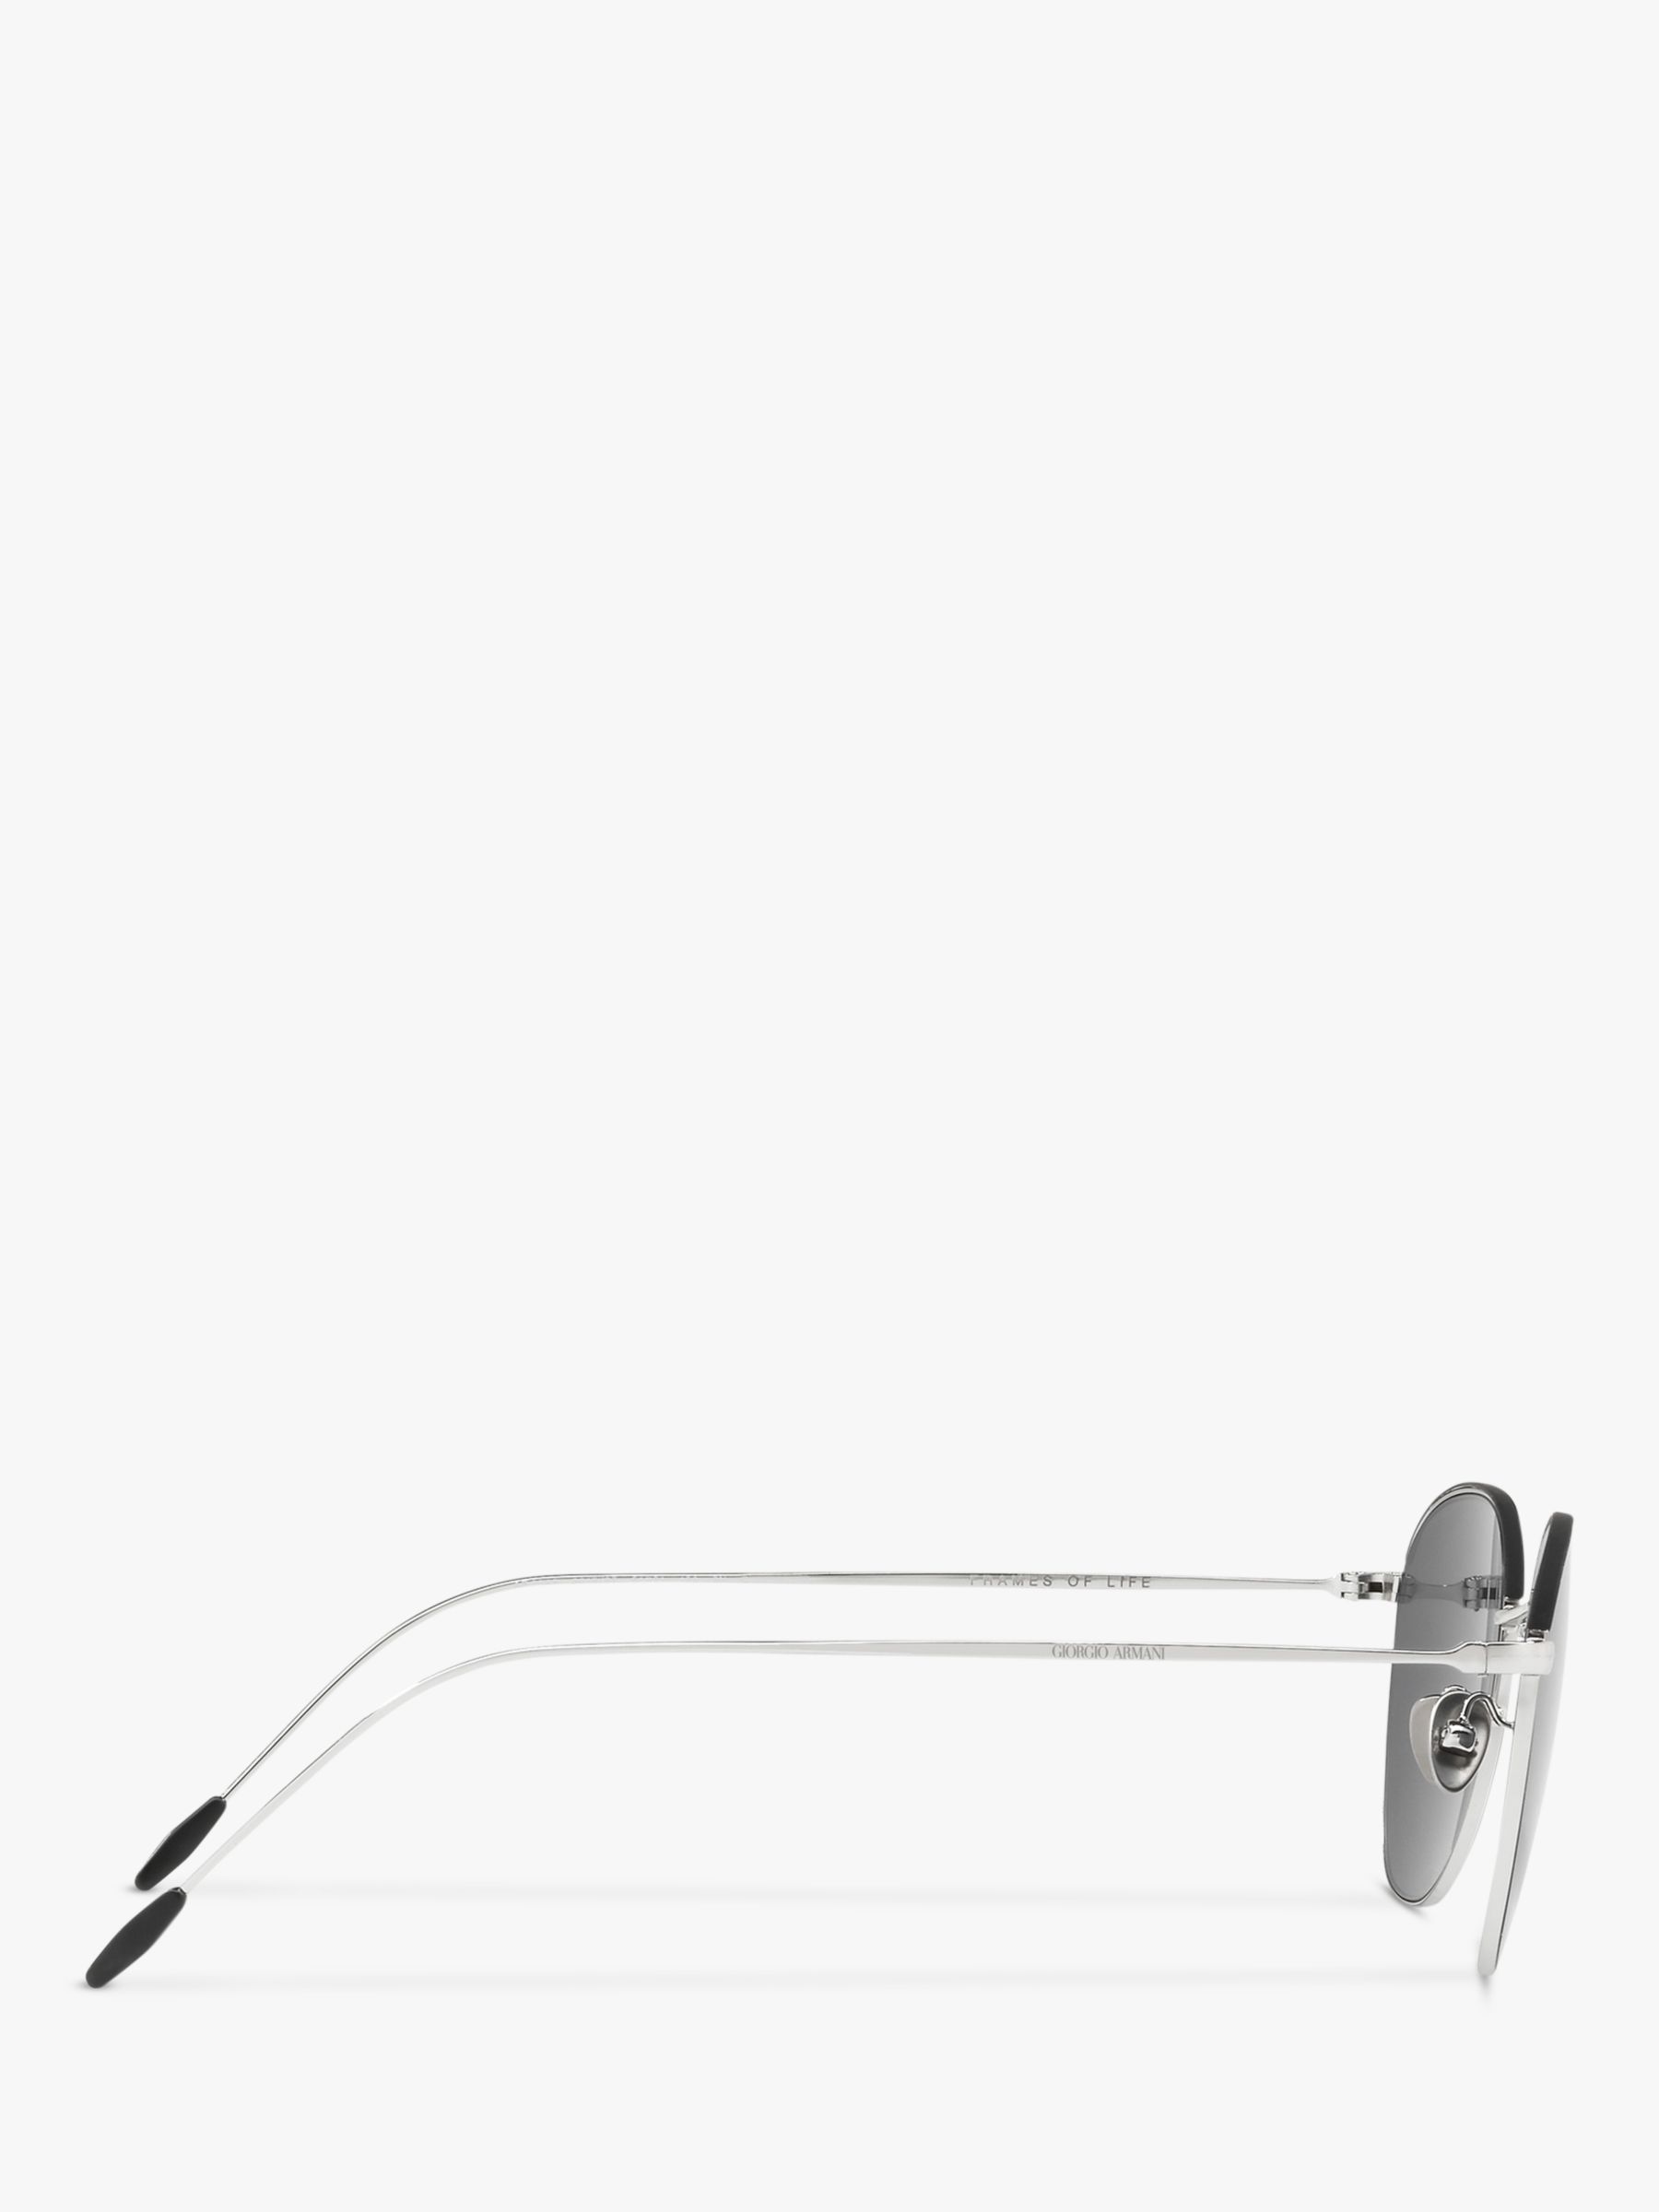 Buy Giorgio Armani AR6048 Men's Oval Sunglasses Online at johnlewis.com